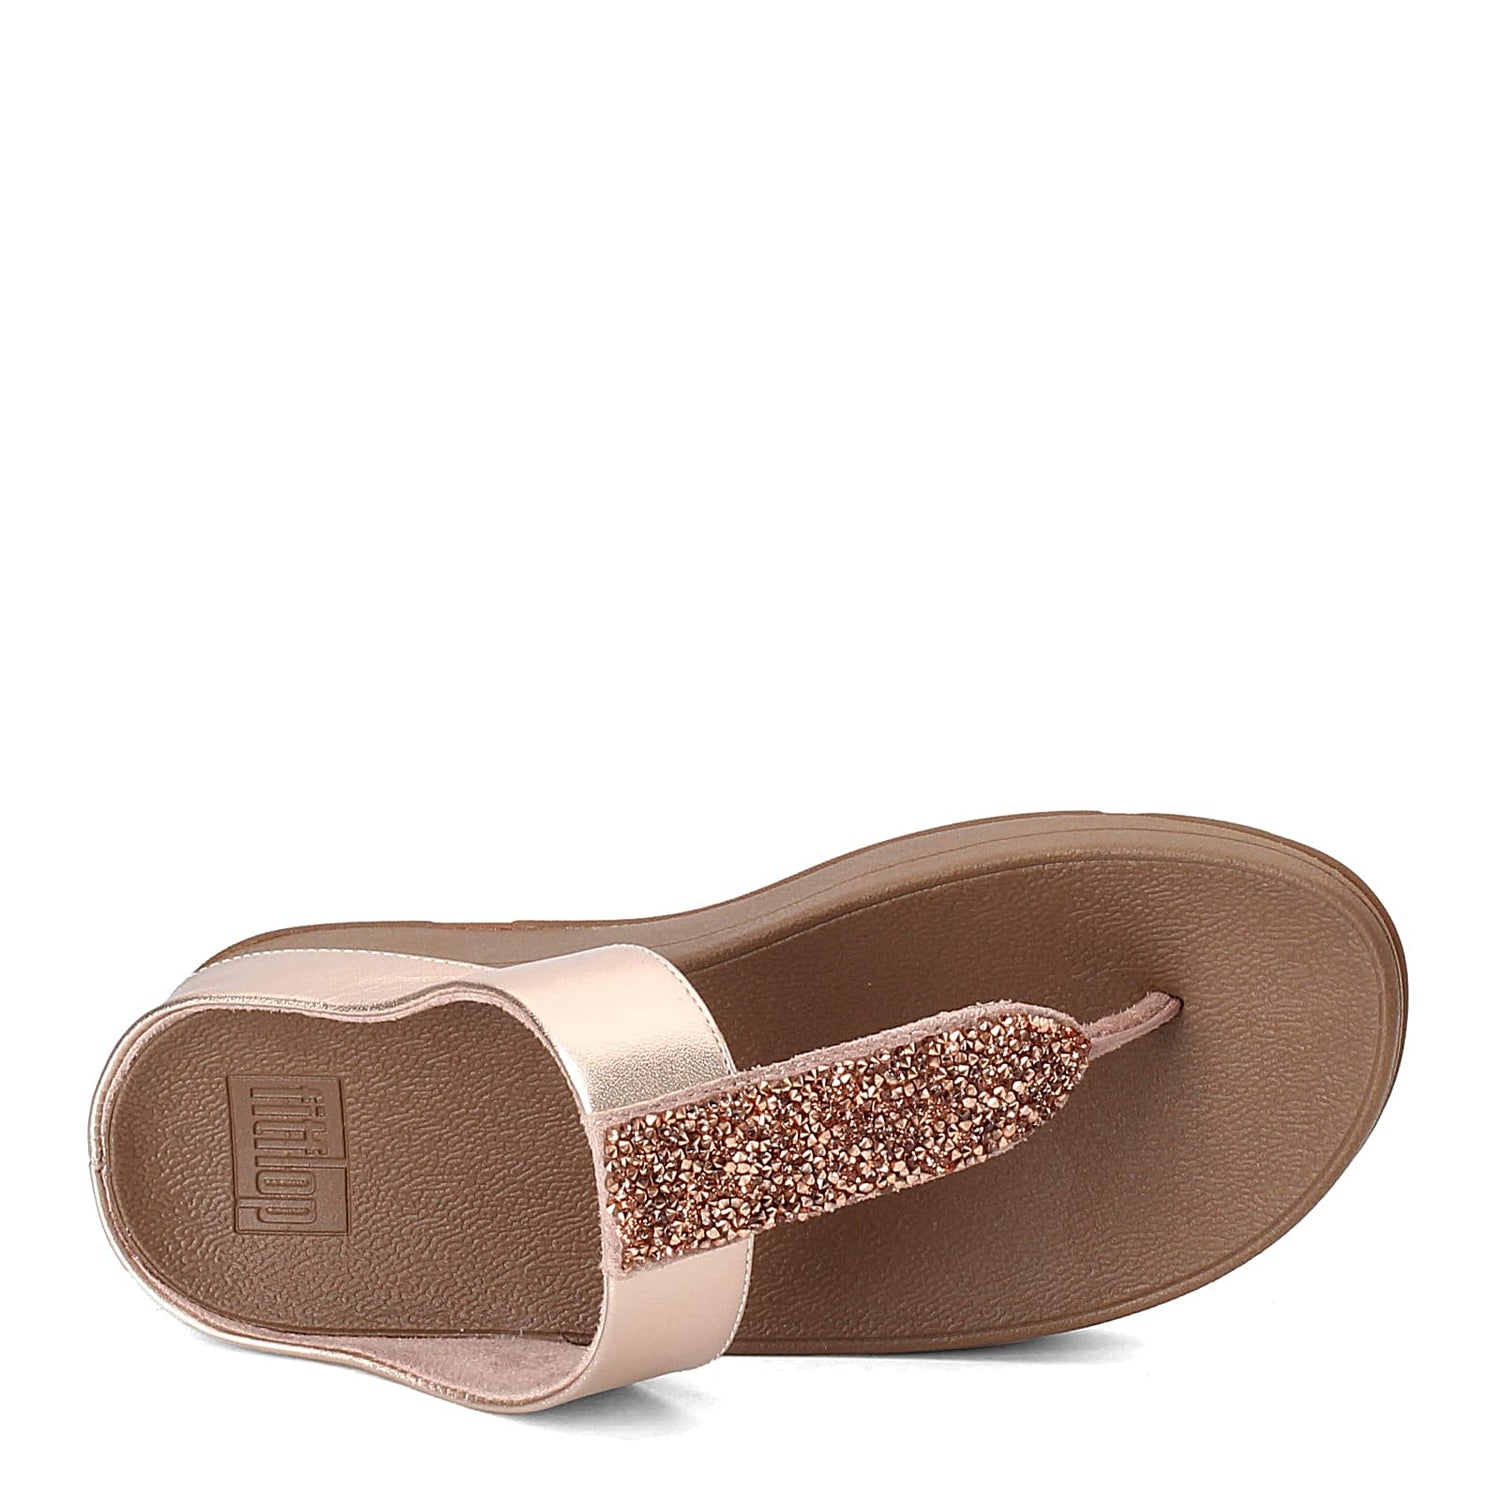 Peltz Shoes  Women's FitFlop Sparklie Crystal Toe Post Thong Sandal